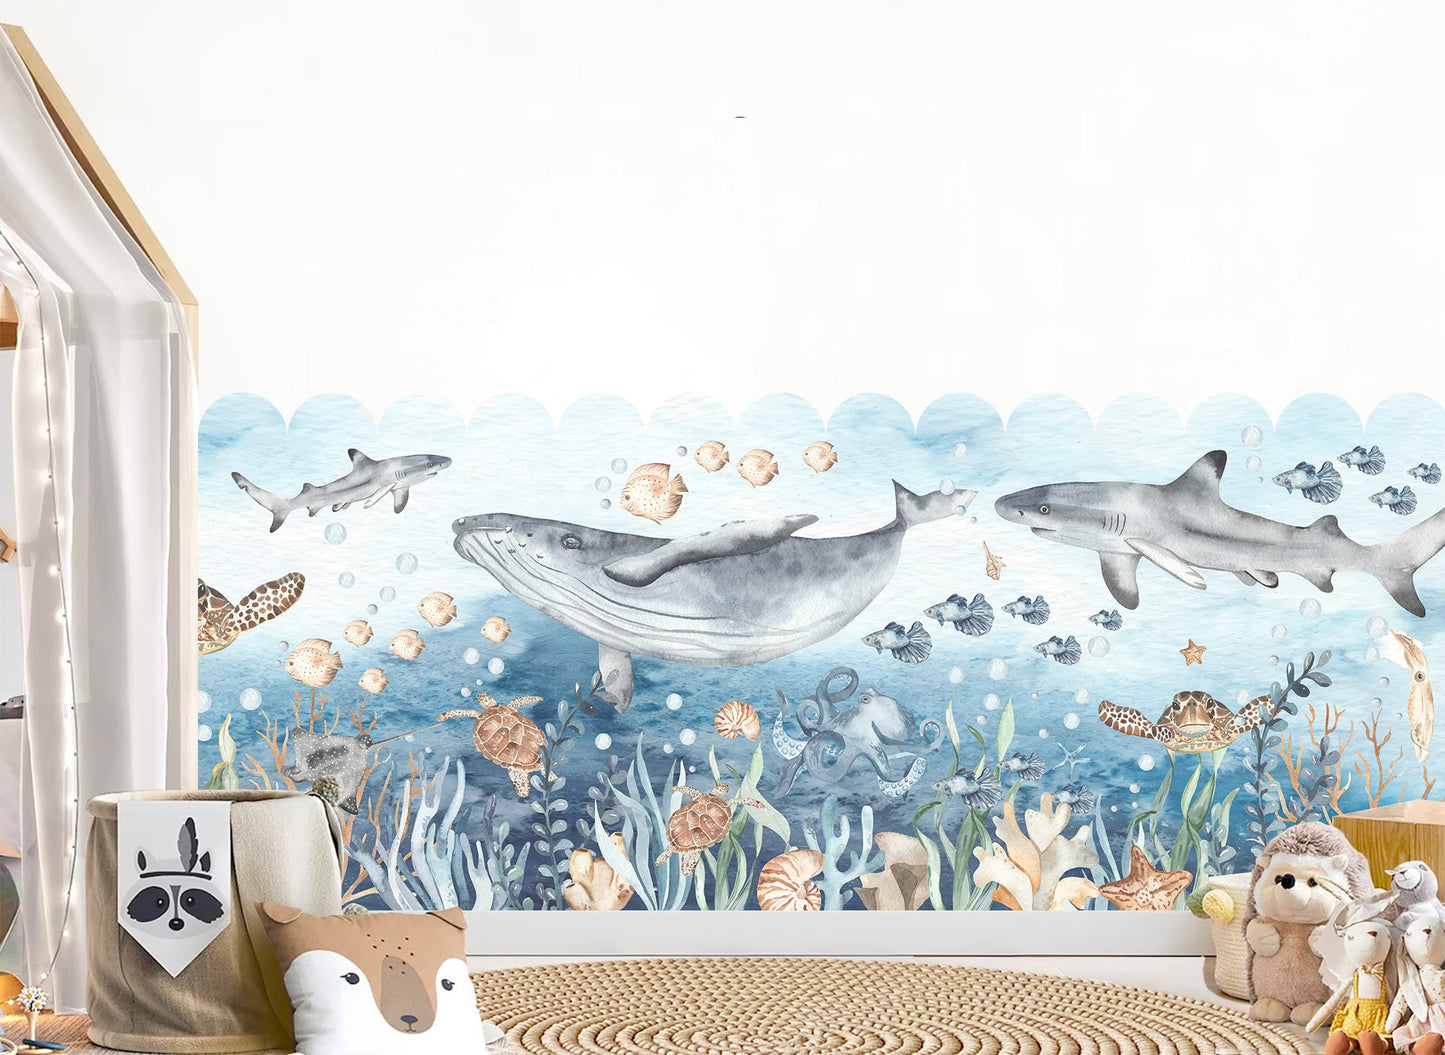 Cartoon Undersea Fabric Wall Mural - Free-Spirited Ocean Creatures: Whales, Turtles, Sharks, Octopuses, Beautiful Watercolor Decor - WM031